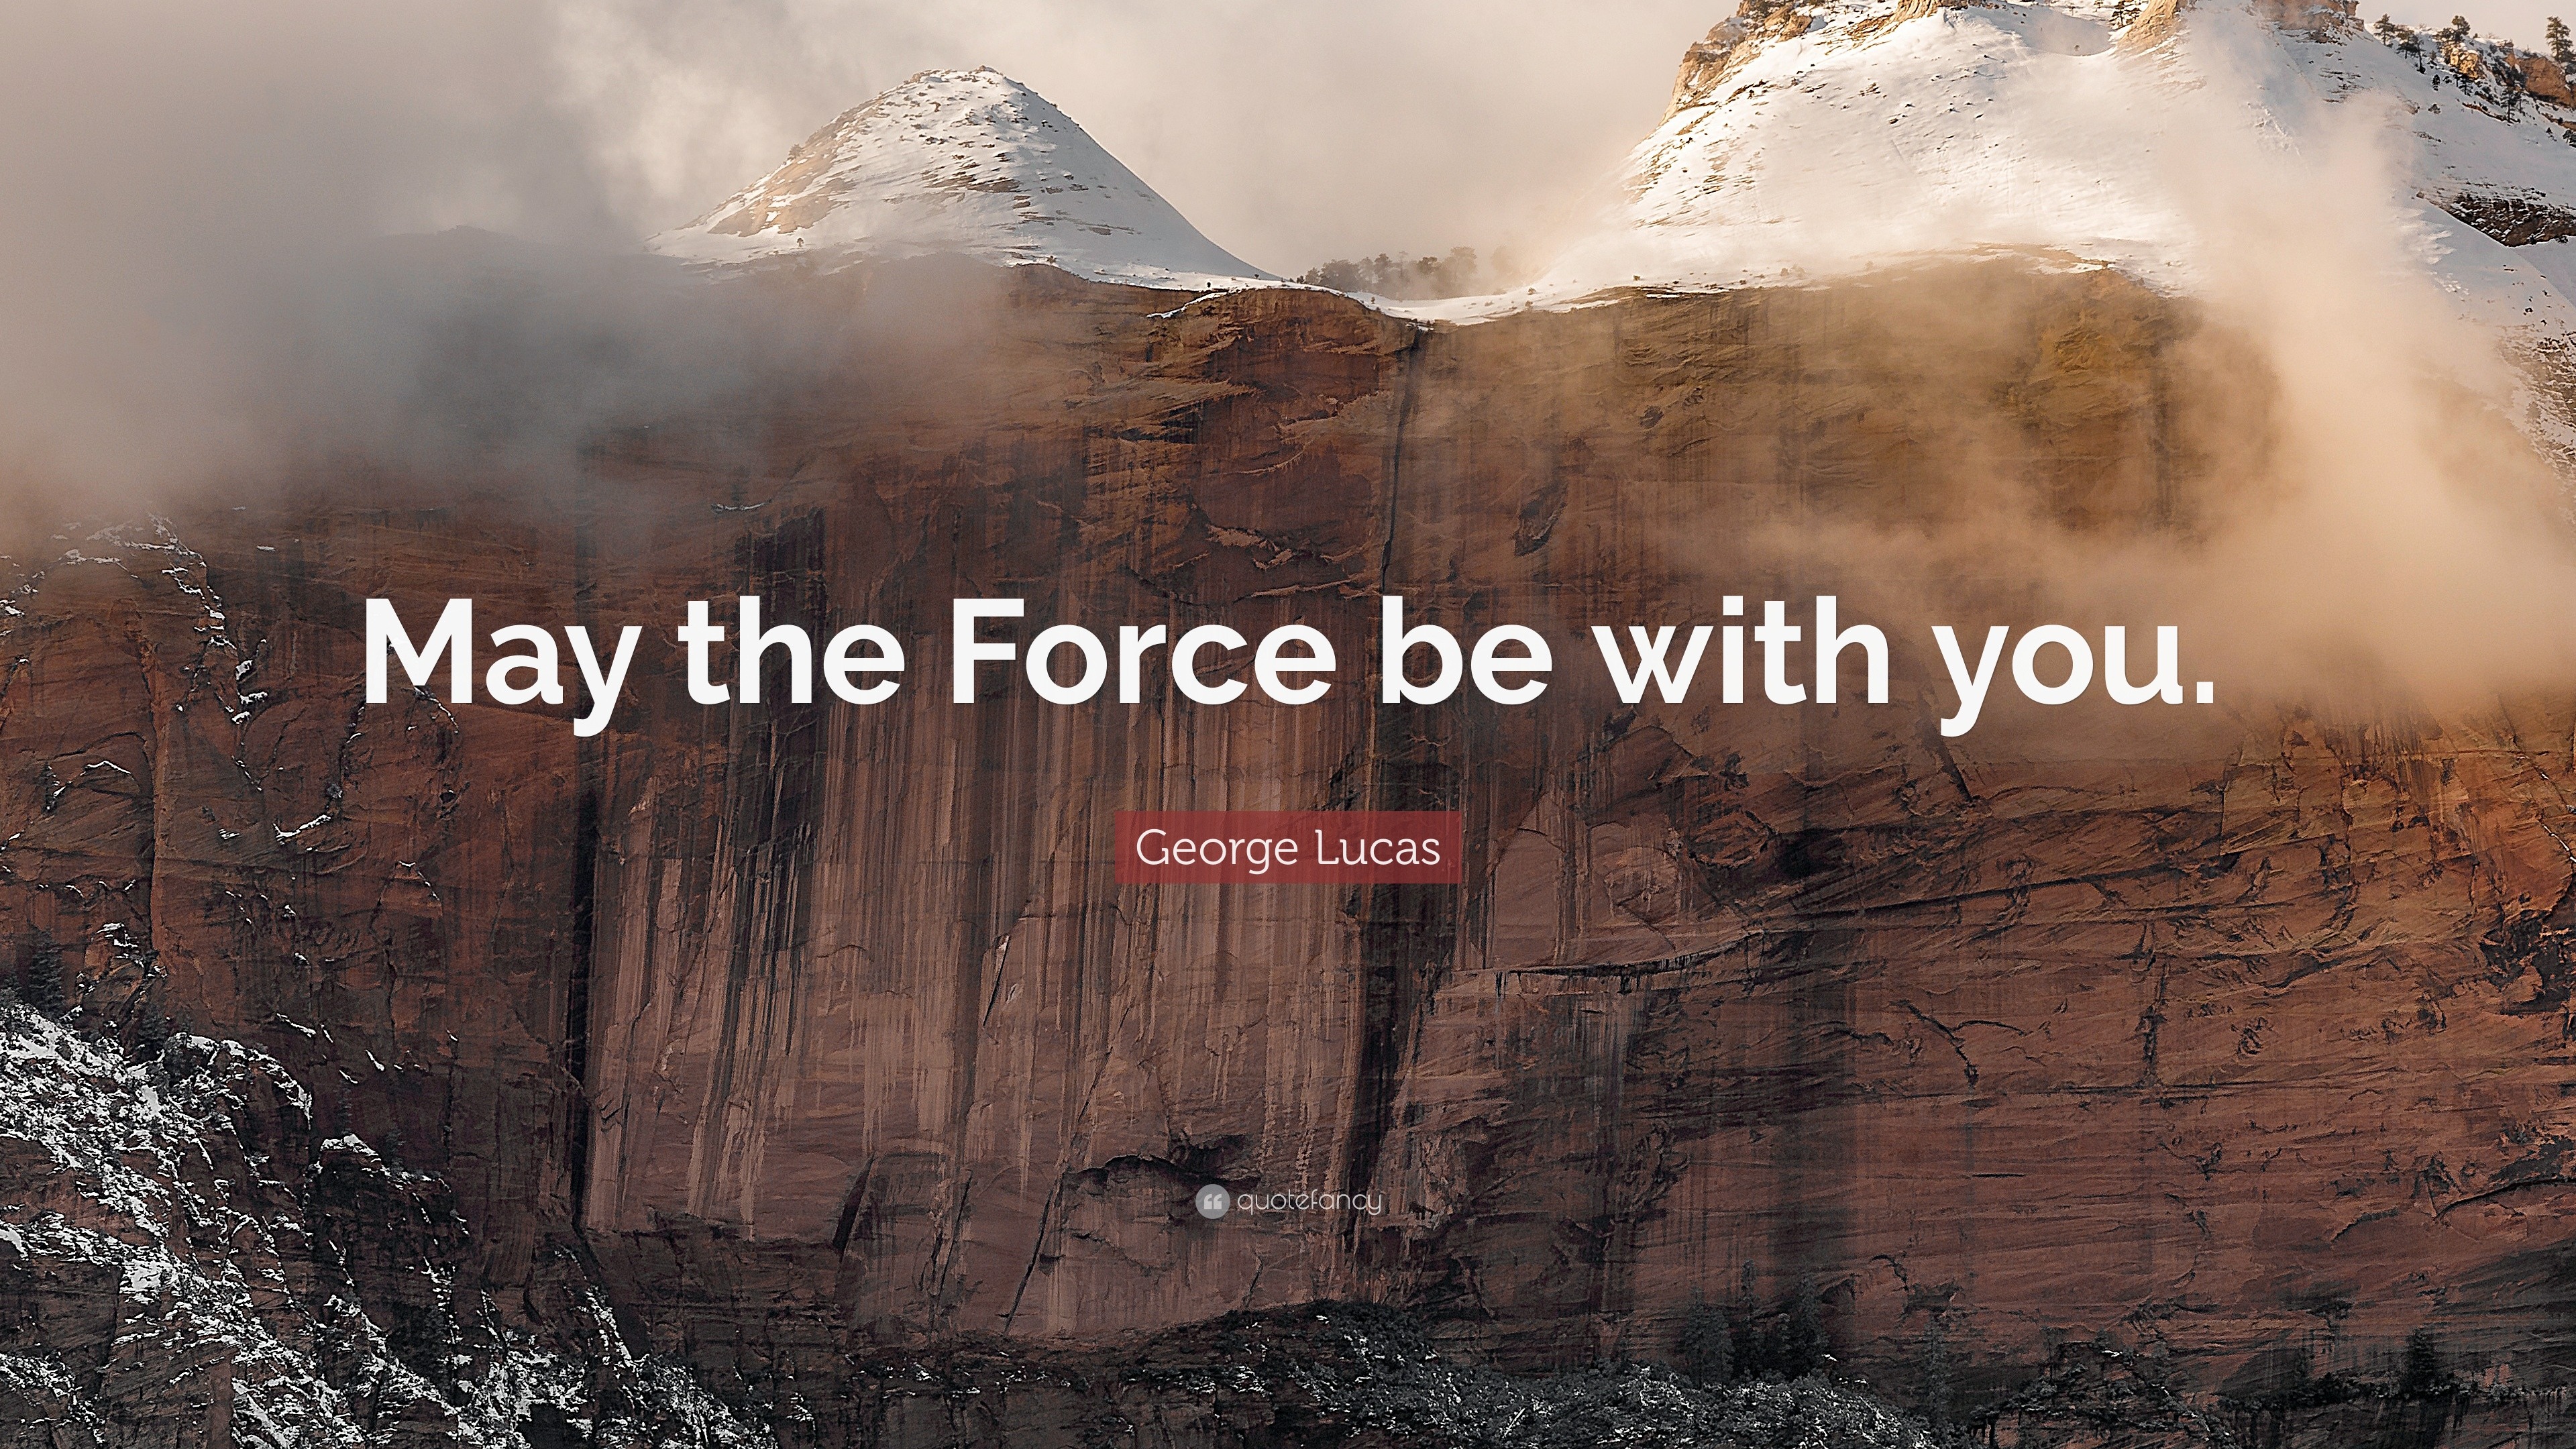 George Lucas Quote: 